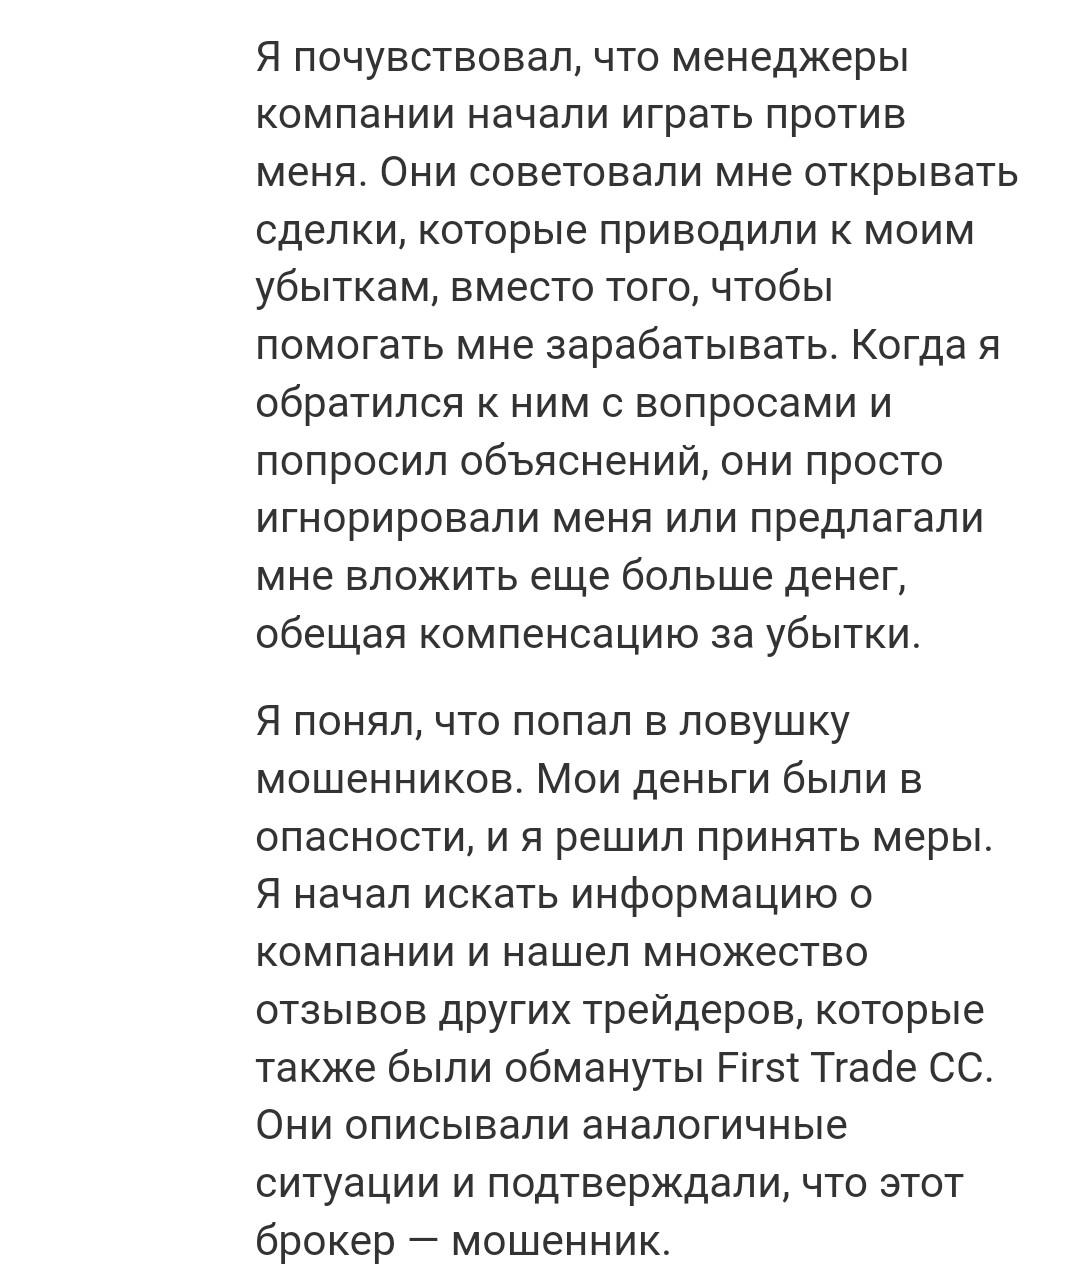 Отзывы о First trade